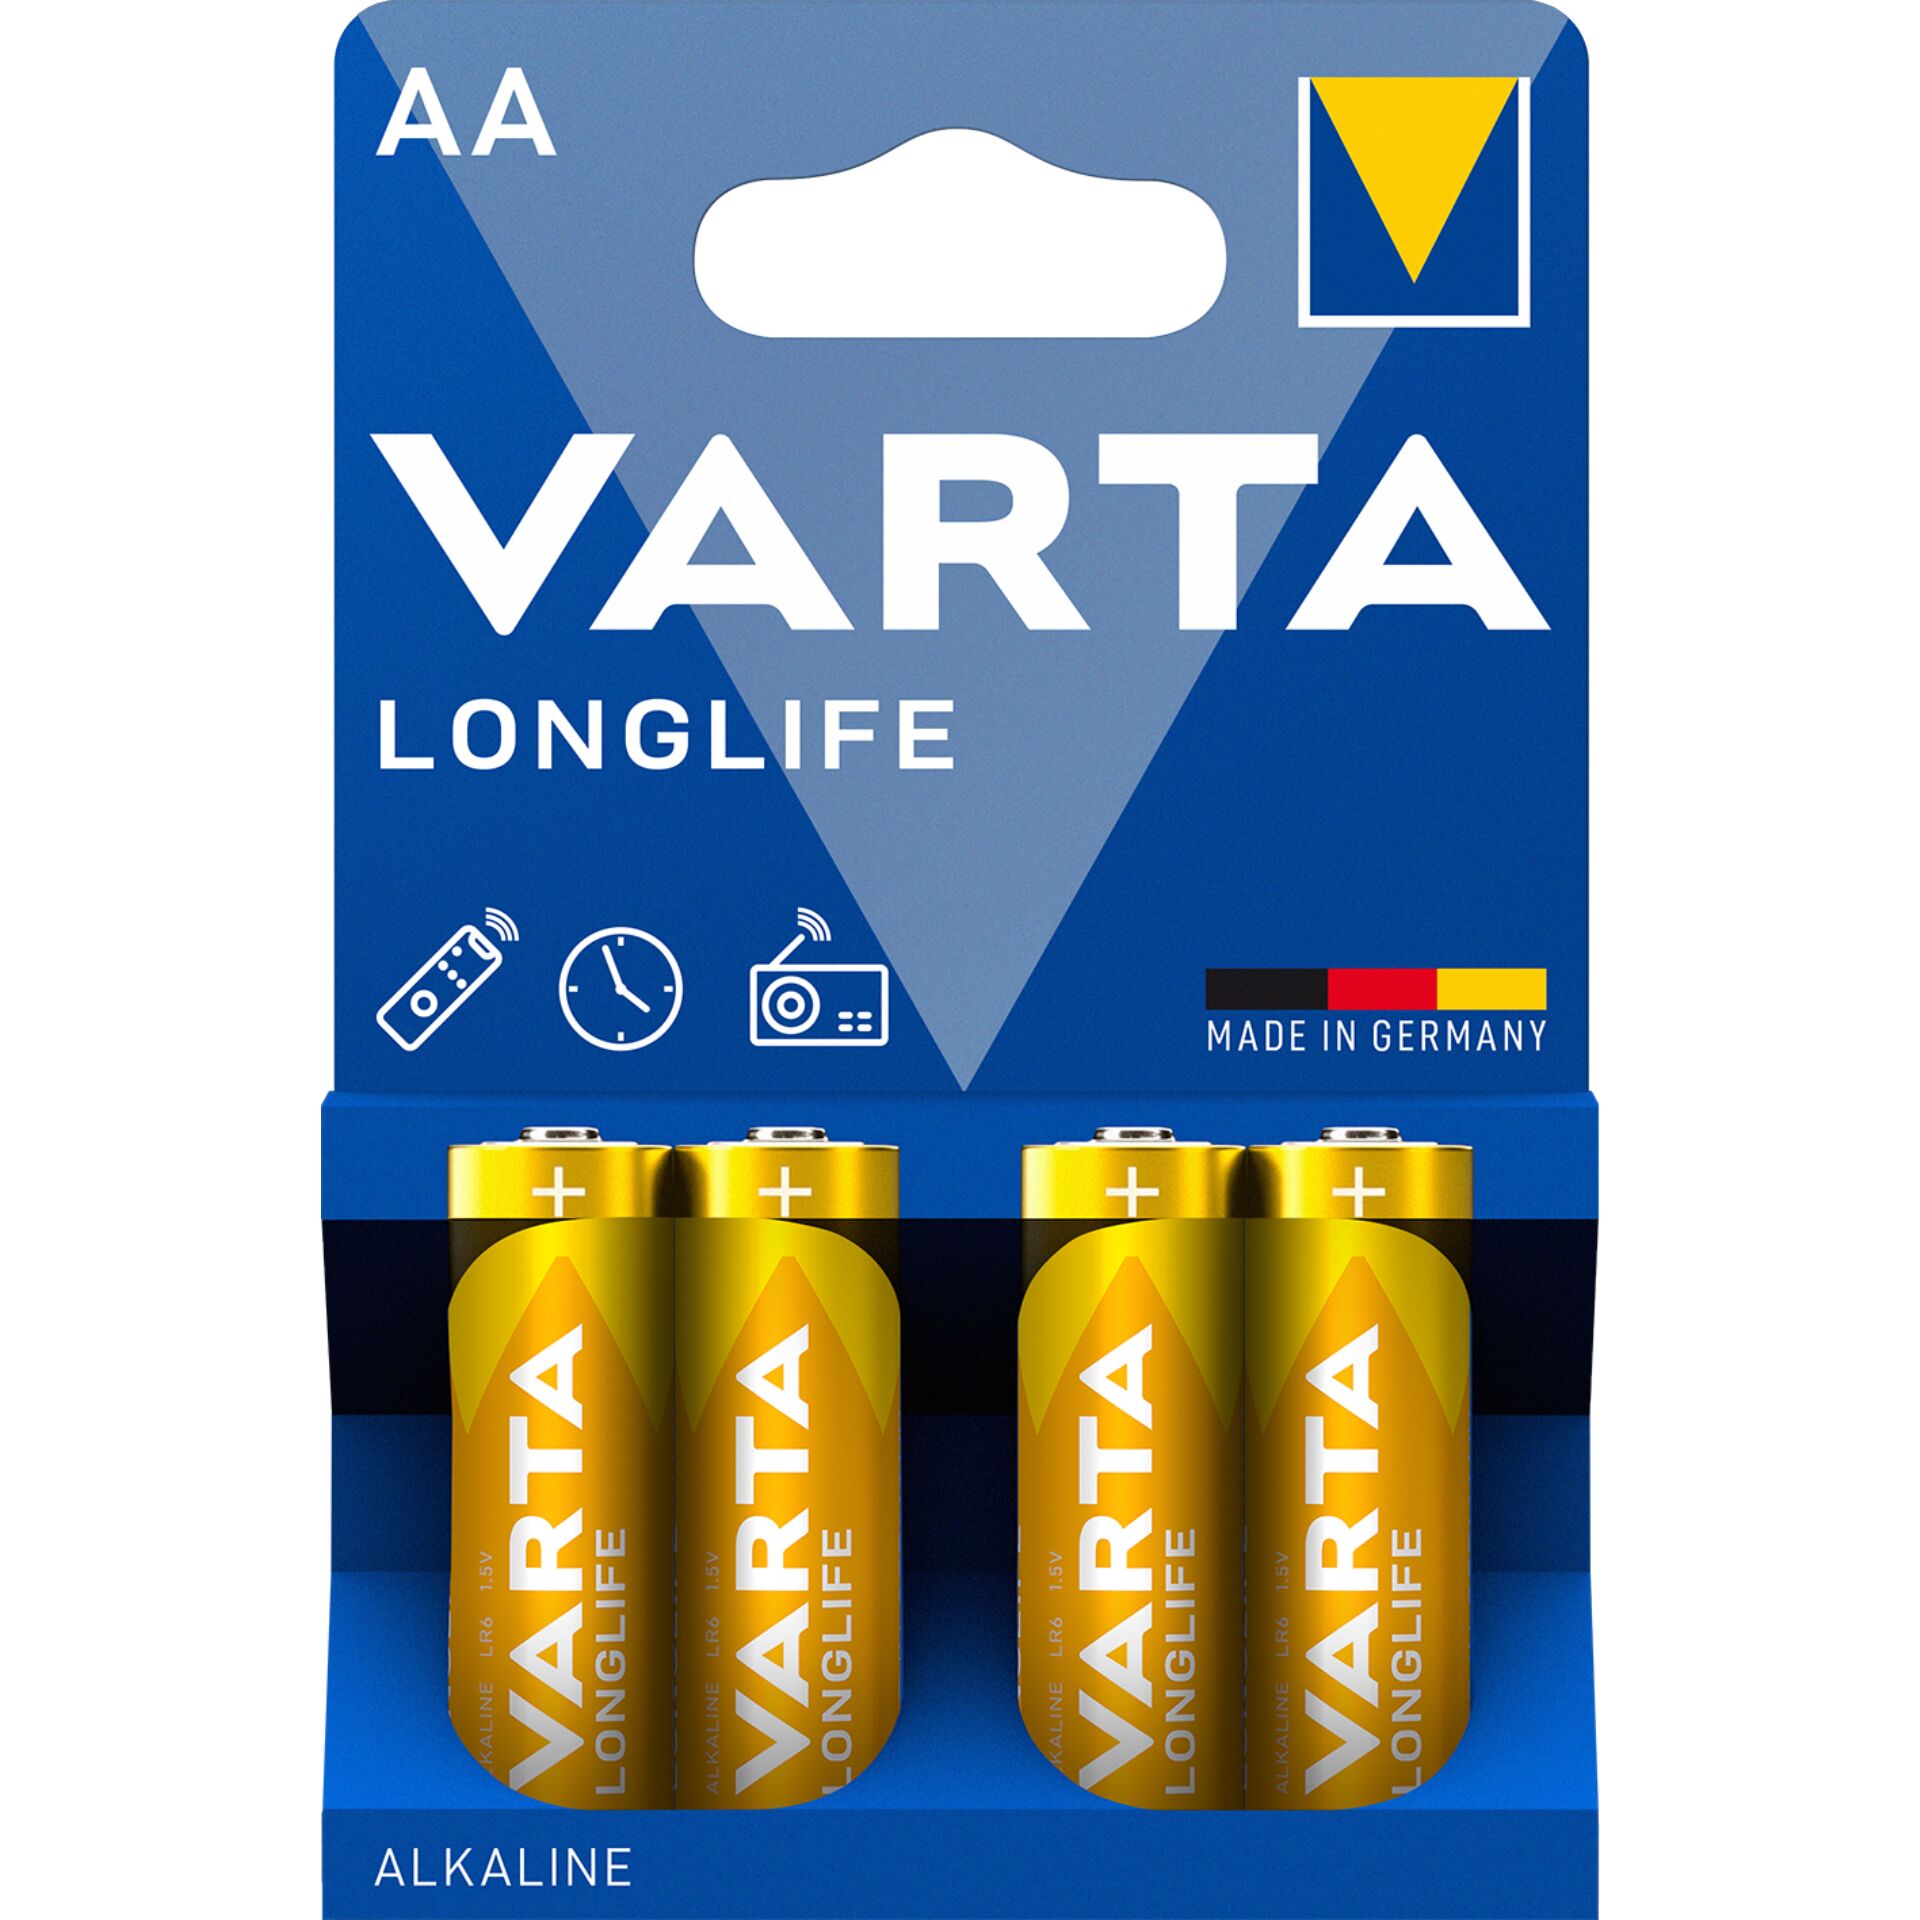 Varta Longlife Extra LR6-AA, Alkali, 1.5V, 4er-Pack 